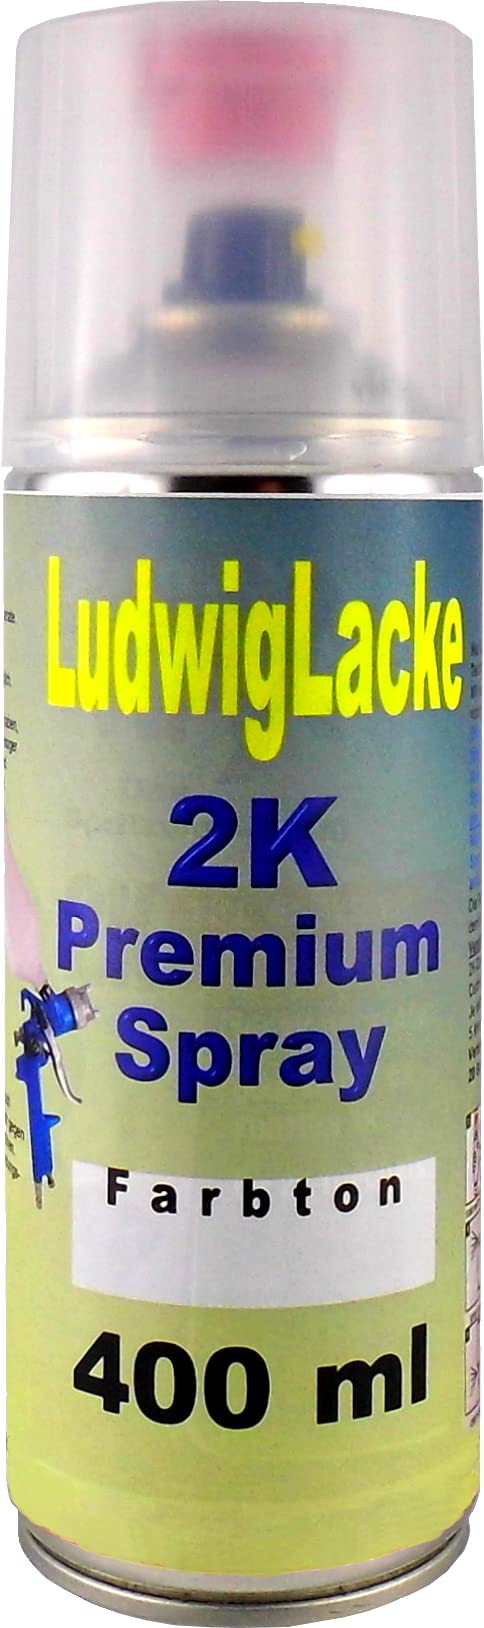 Ludwig Lacke RAL 9001 CREMEWEISS 2K Premium Spray 400ml von Ludwiglacke